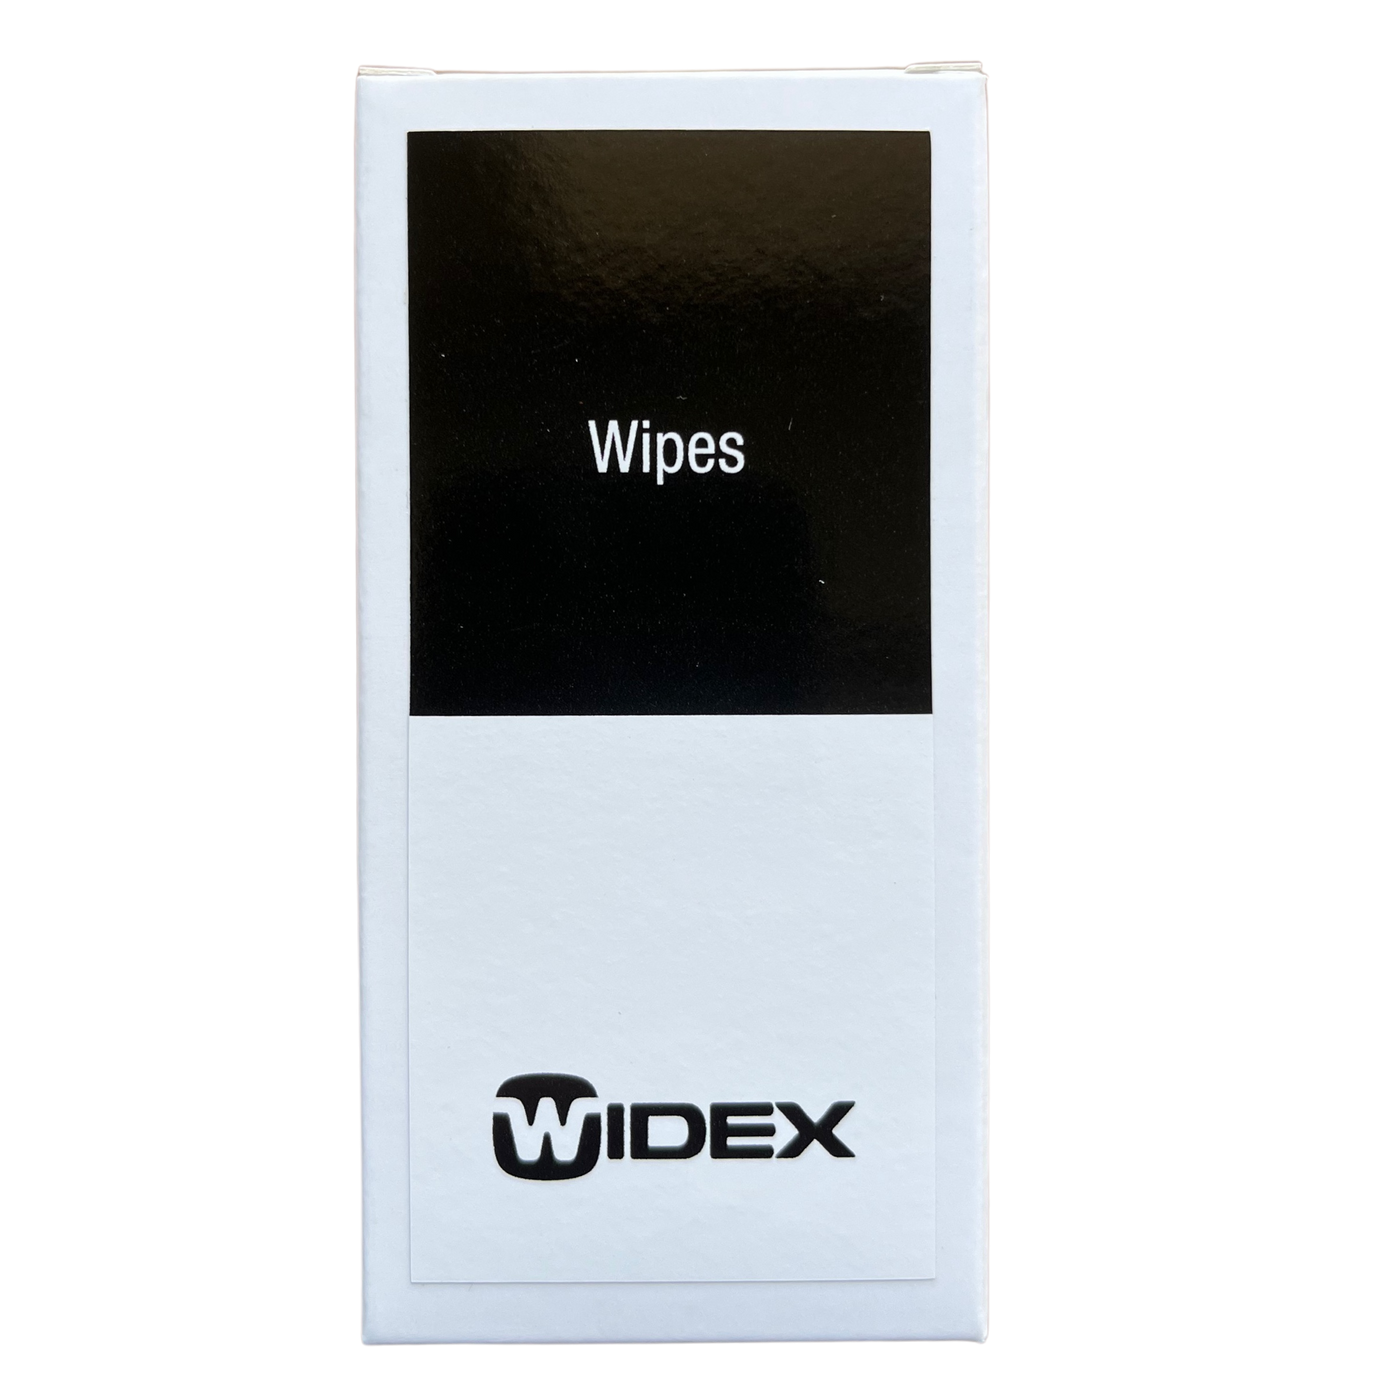 Widex tilbehør - Våtservietter